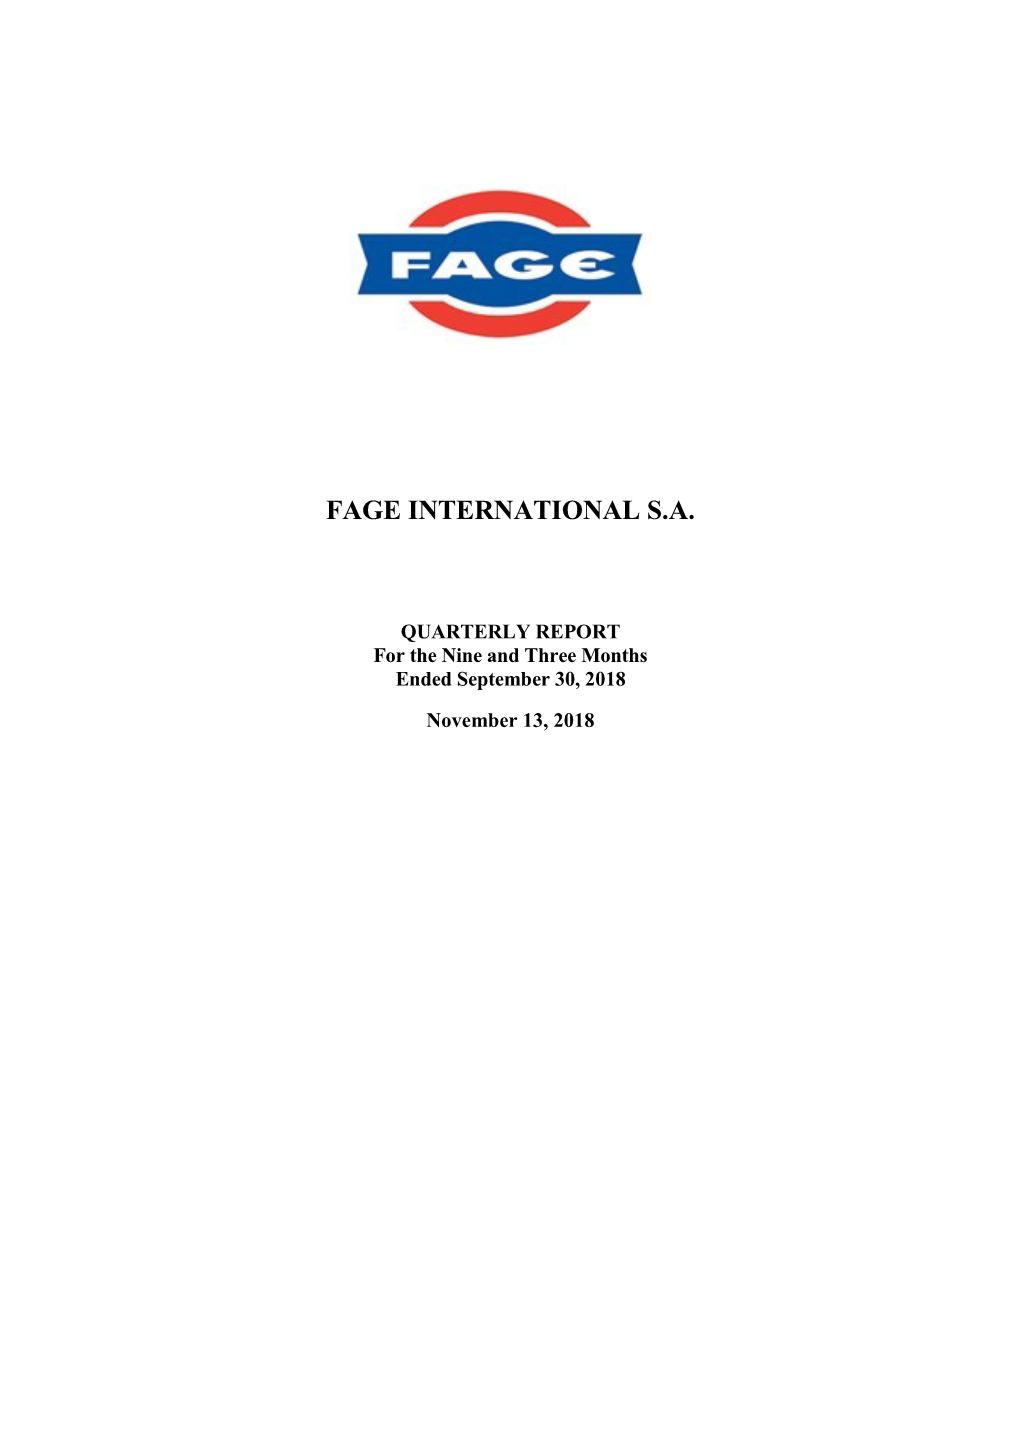 Fage International S.A